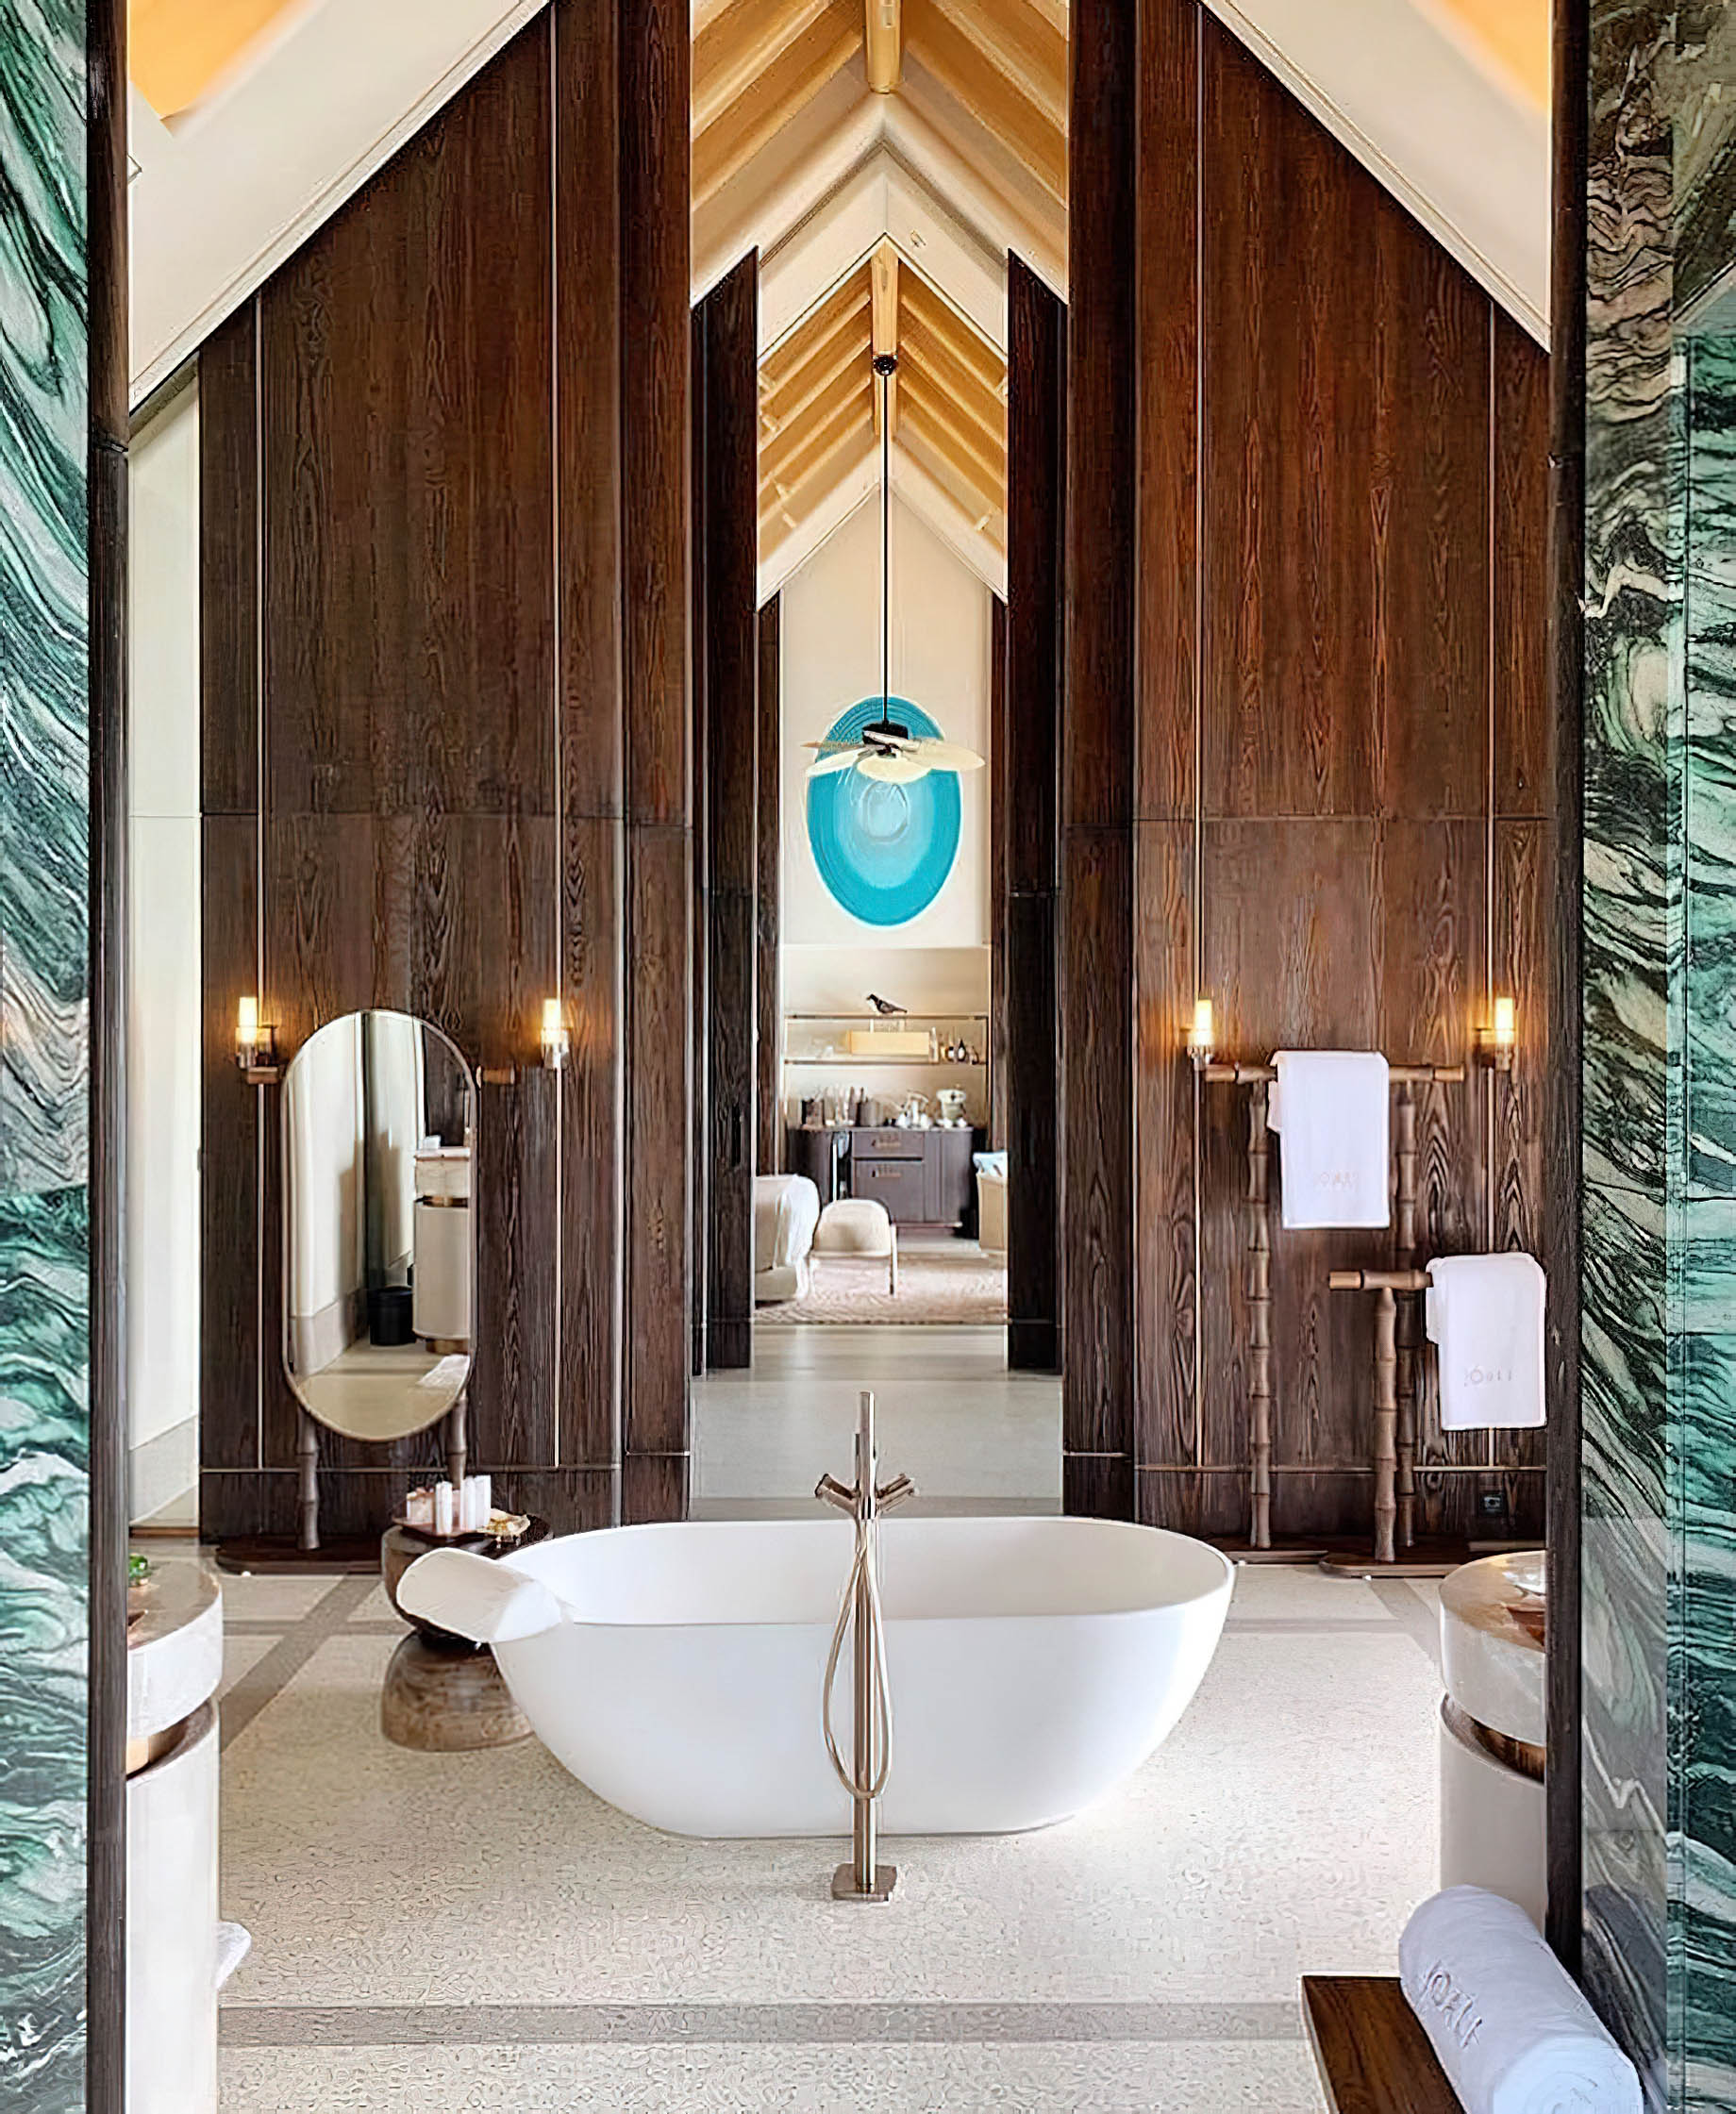 JOALI Maldives Resort – Muravandhoo Island, Maldives – Water Villa Bathroom